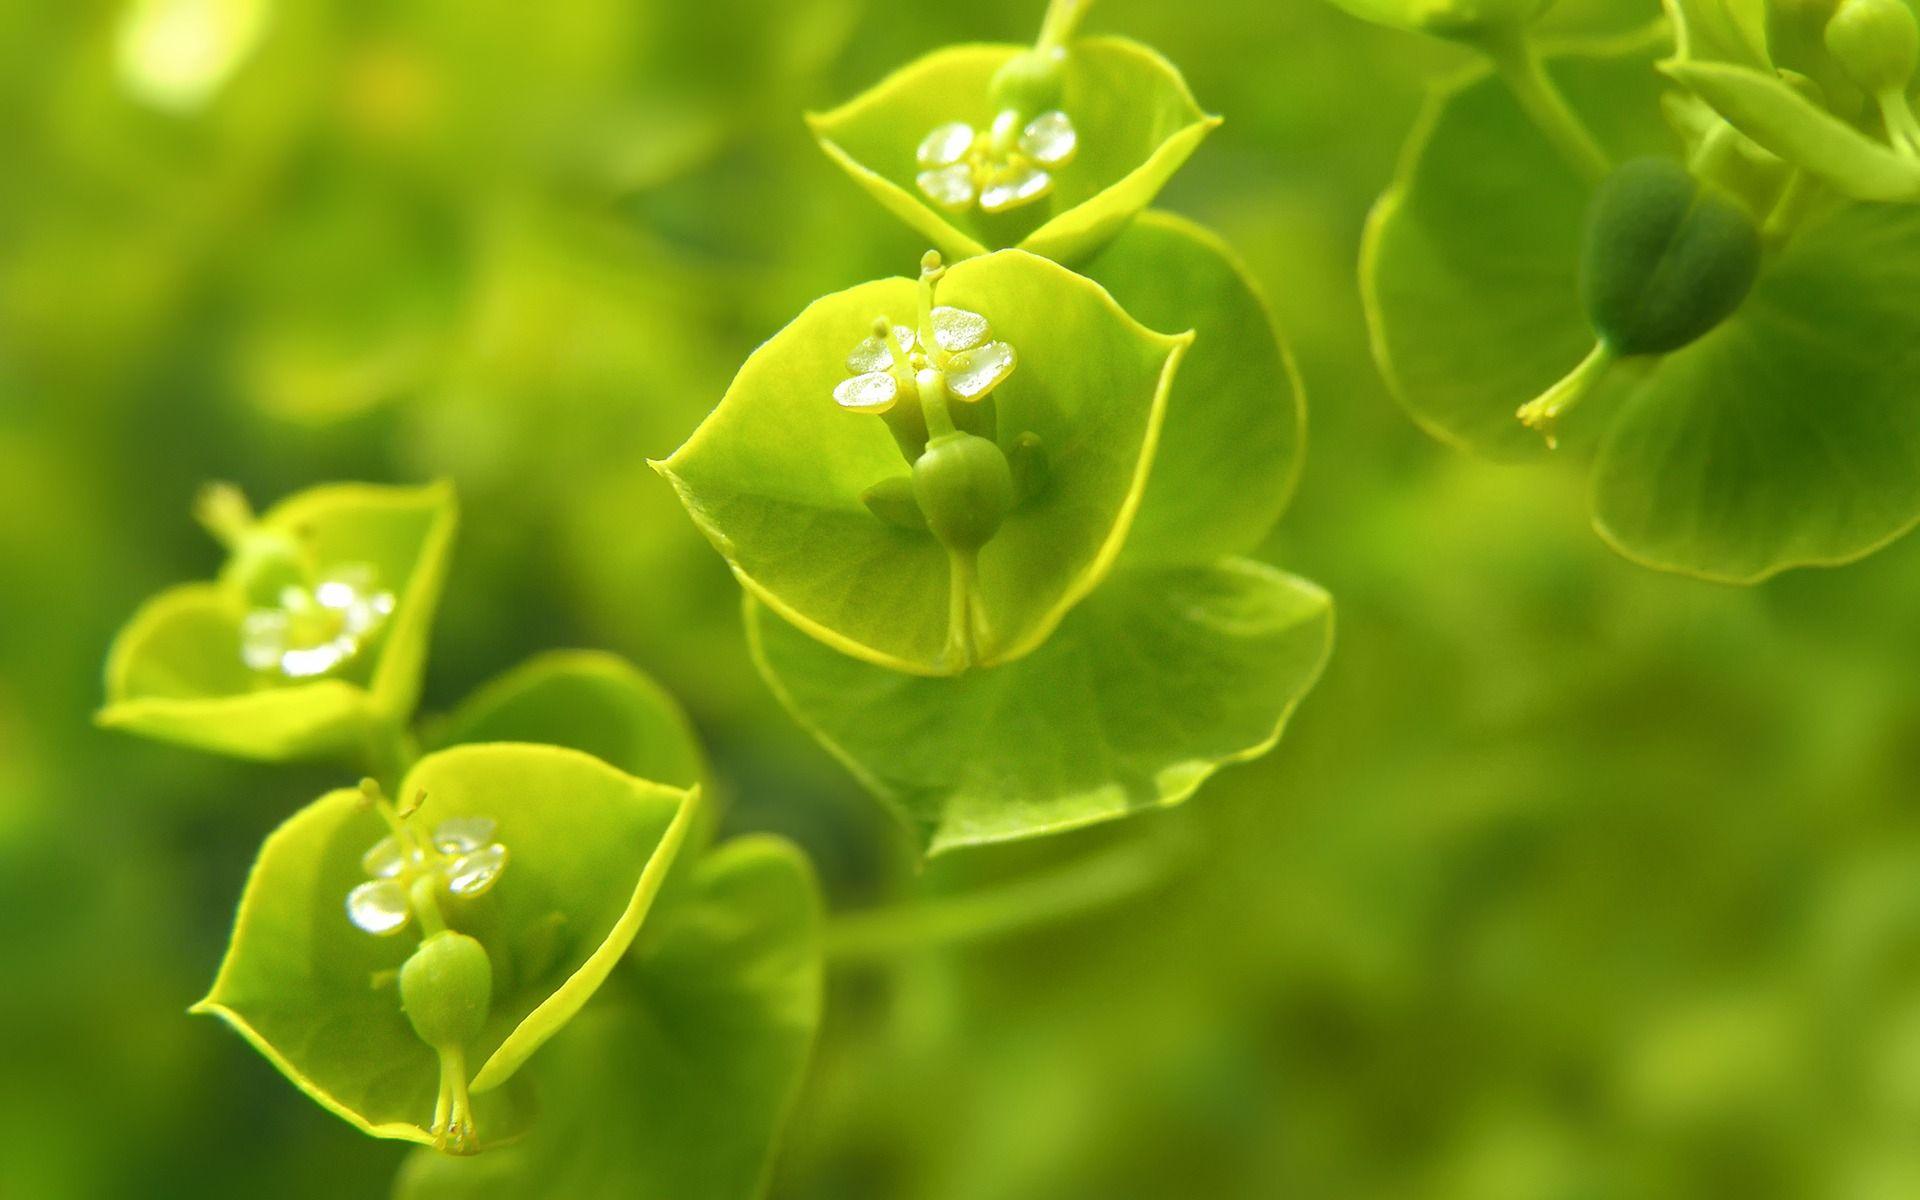 In The Green Wallpaper Plants Nature Wallpaper in jpg format